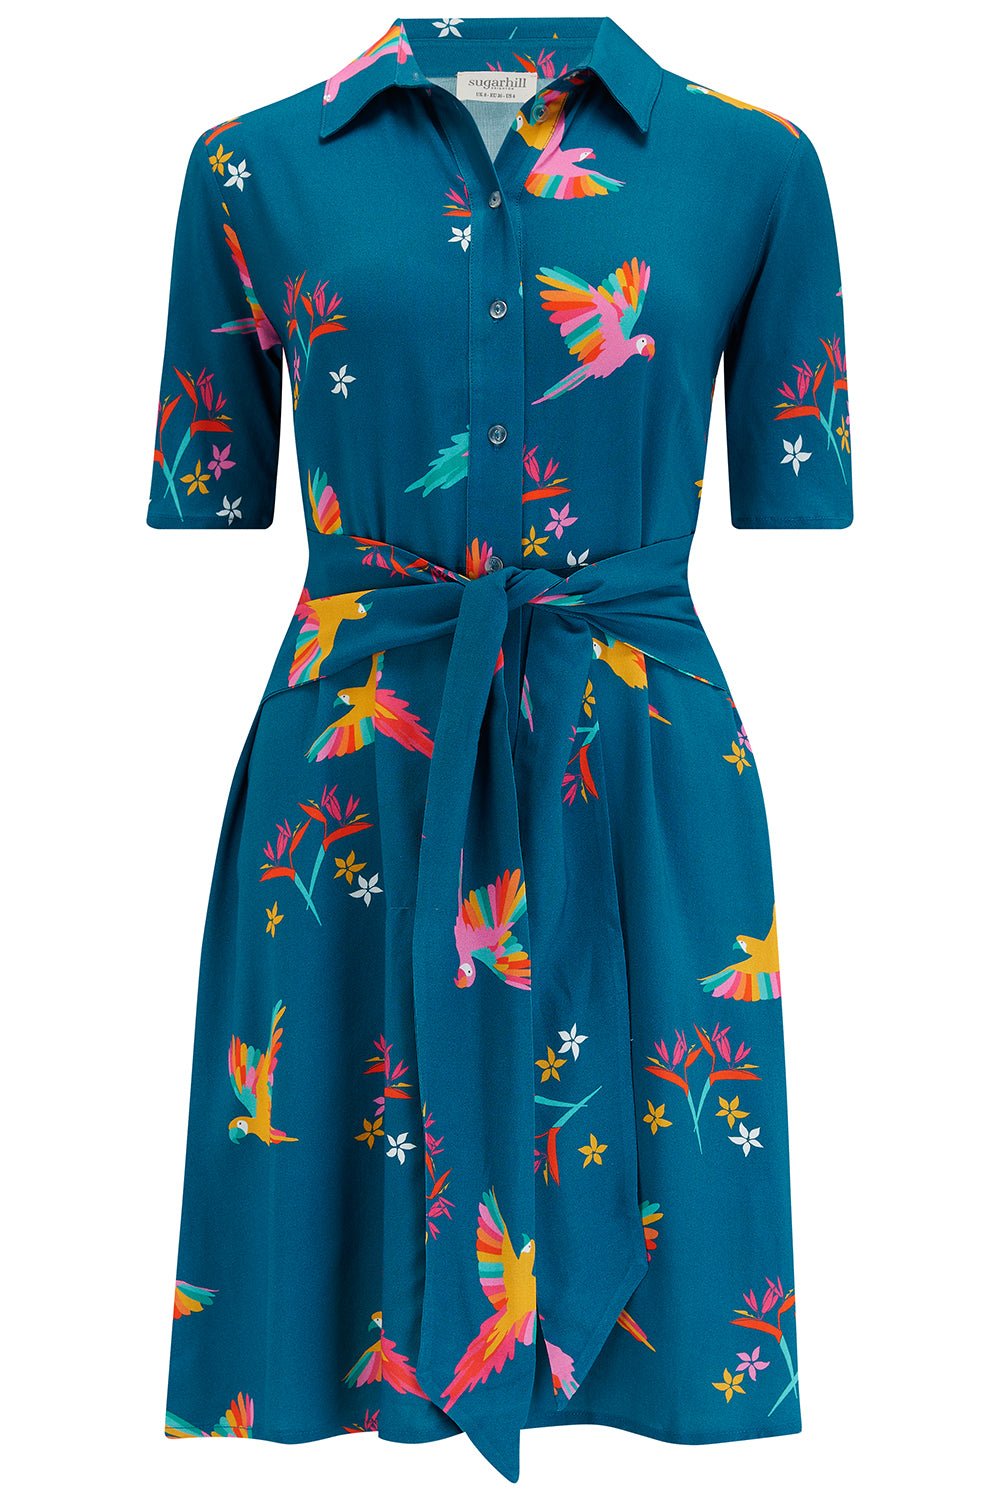 Dessie Shirt Dress - Rainbow Parrots - Rockamilly-Dresses-Vintage